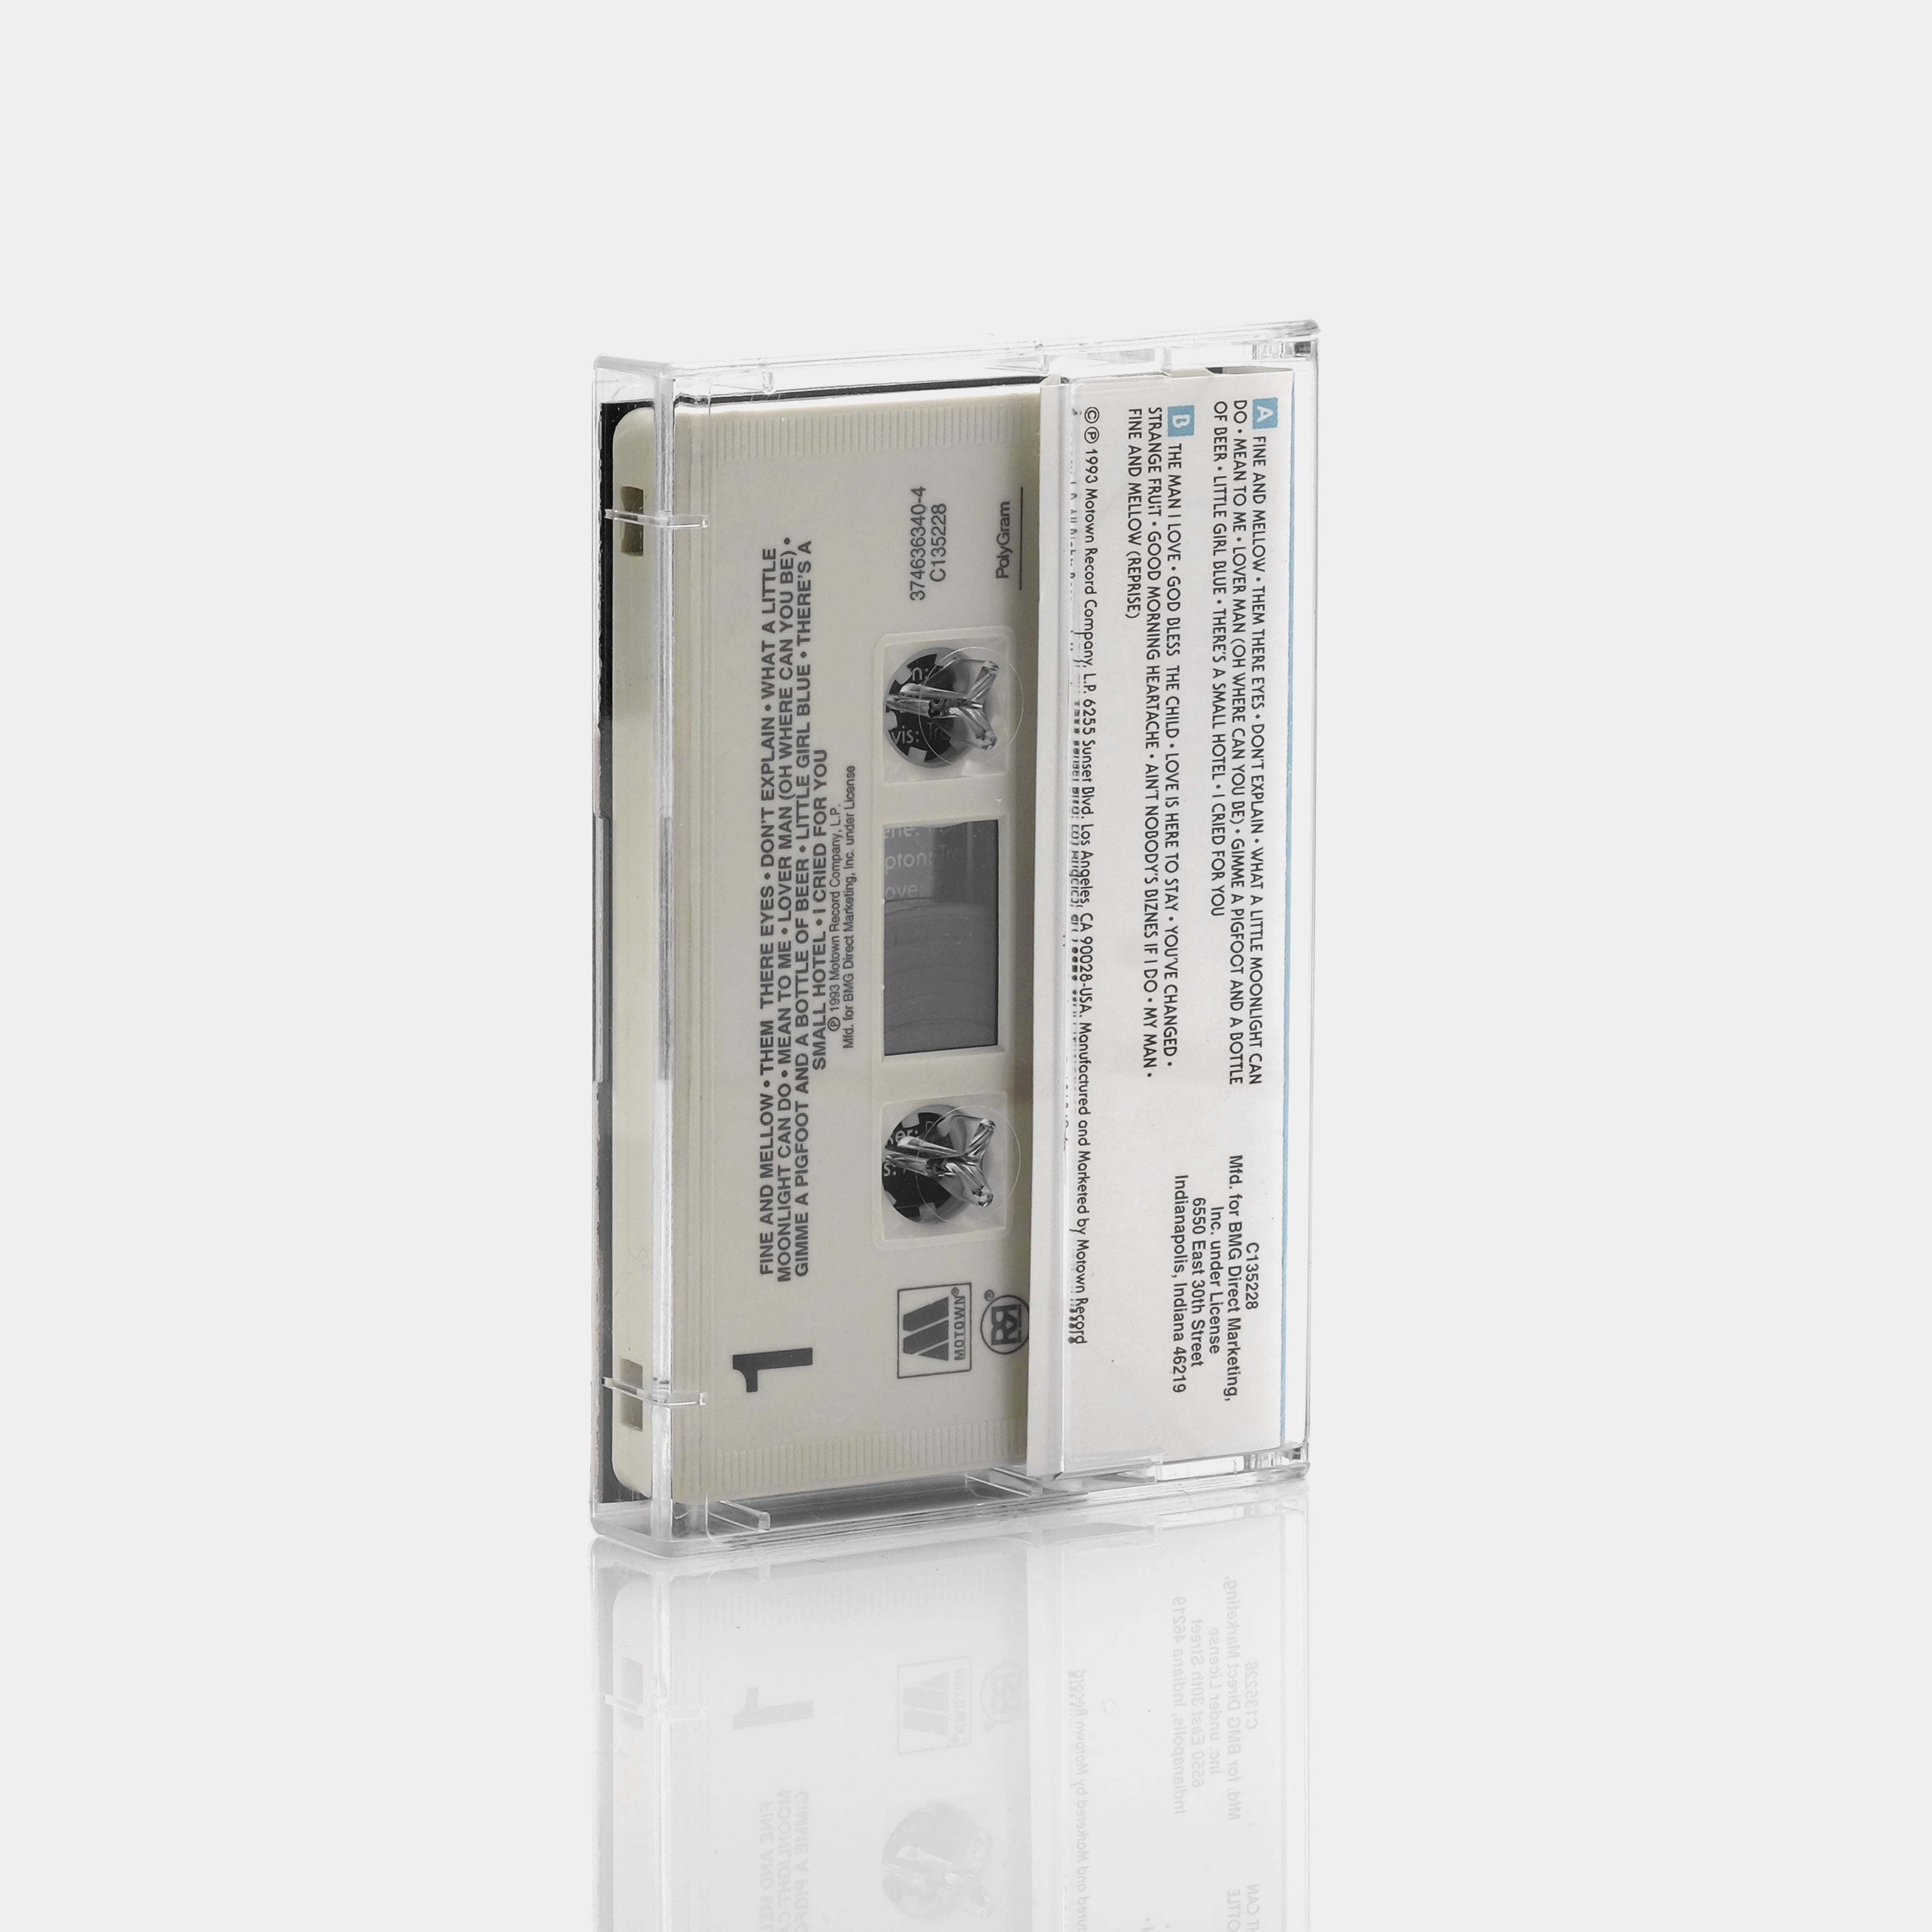 Stolen　Cassette　The　Diana　Tape　Ross　Jazz　Moments:　Lady　Sings　Blues